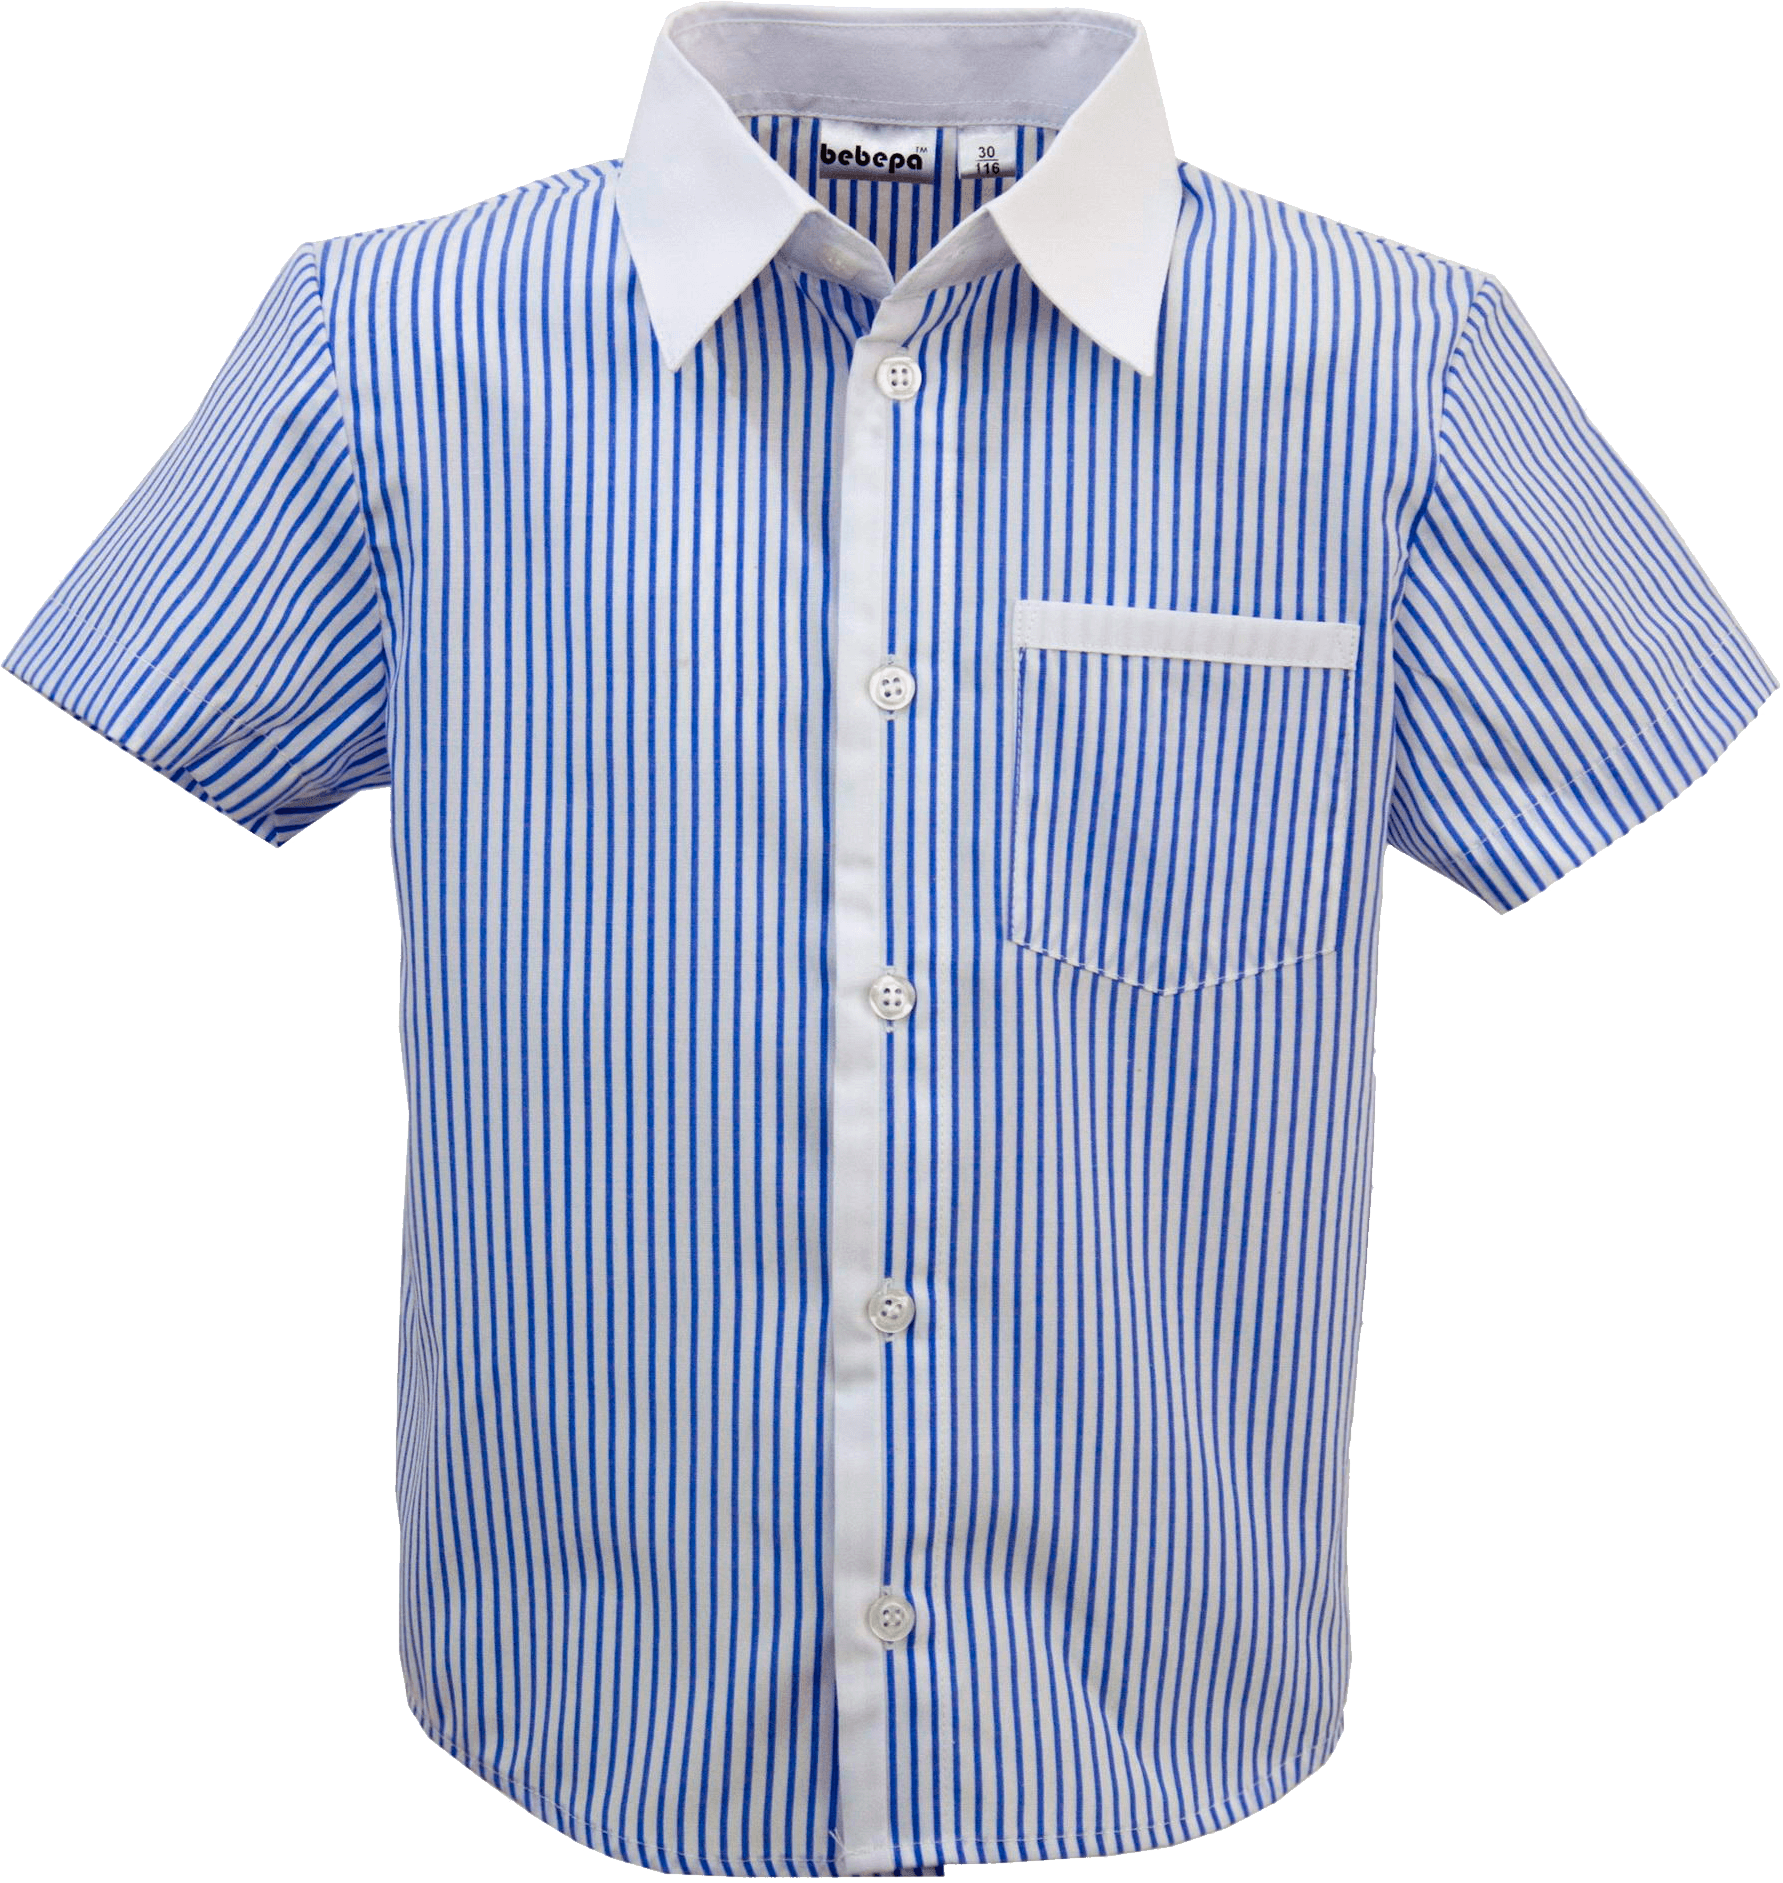 Download PNG image - Dress Shirt PNG HD Quality 